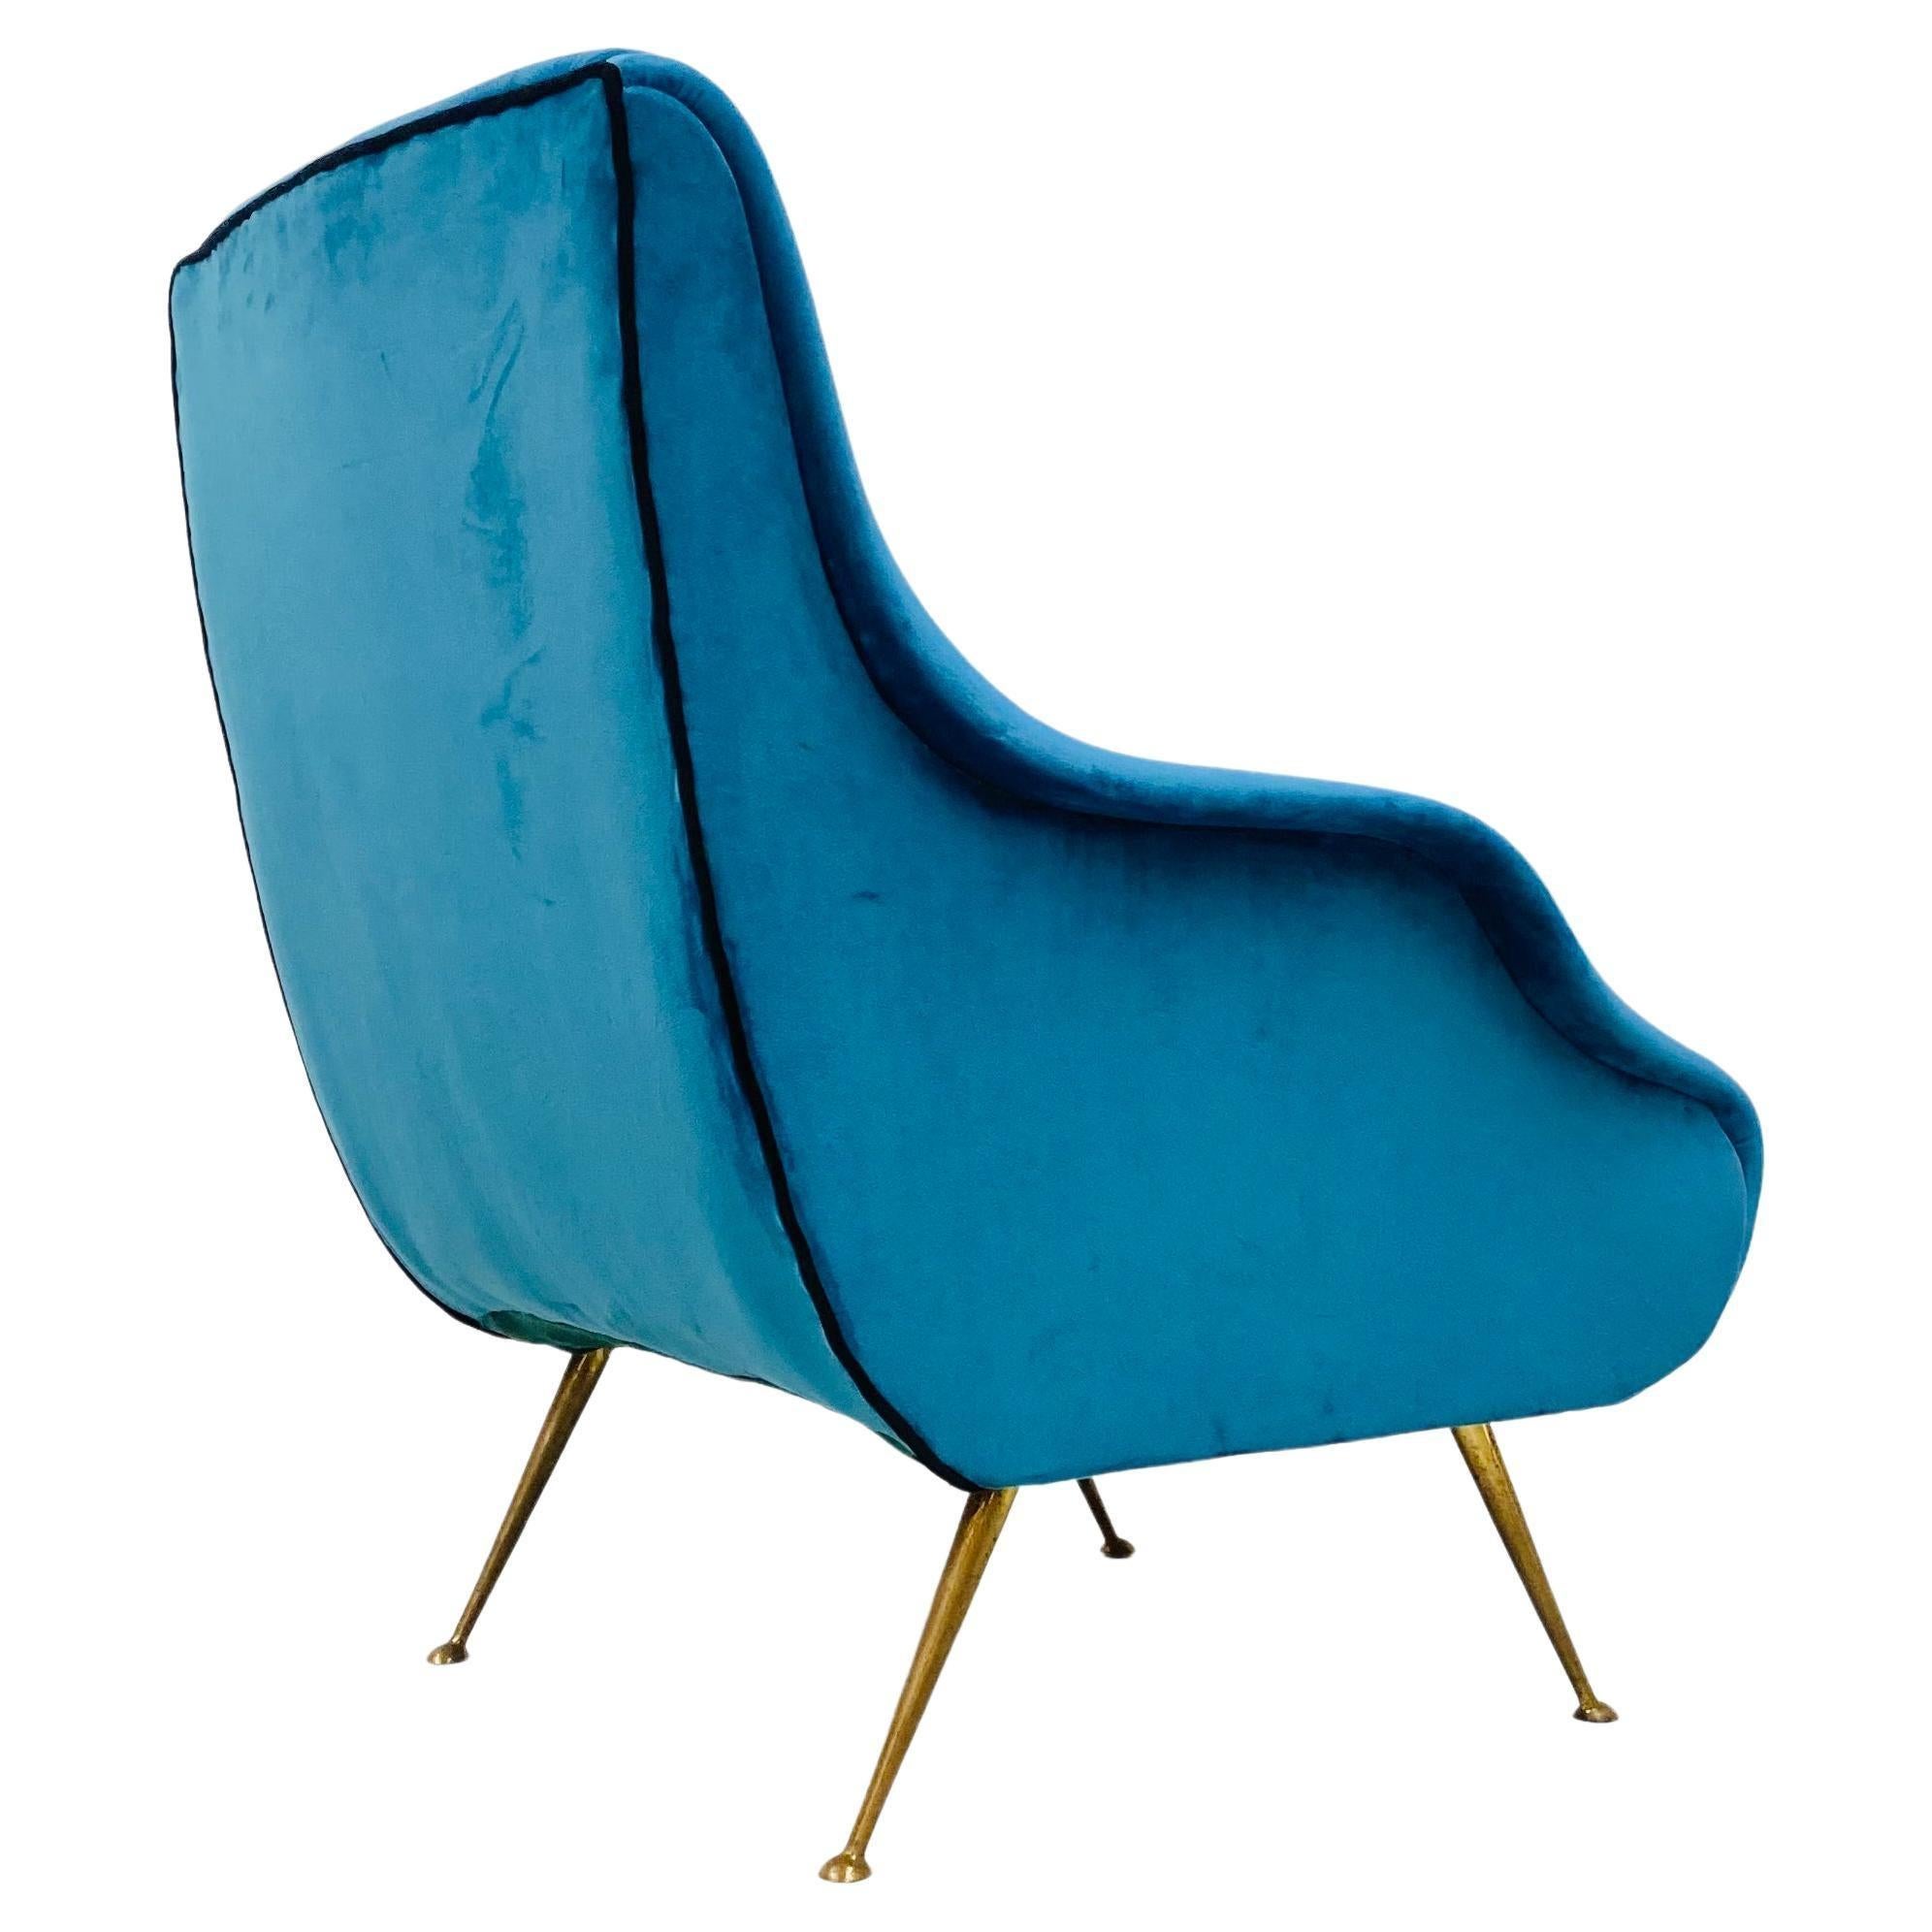 Vintage Italian Blue Velvet Armchair with Brass Legs by Carlo de Carli, 1950s For Sale 8